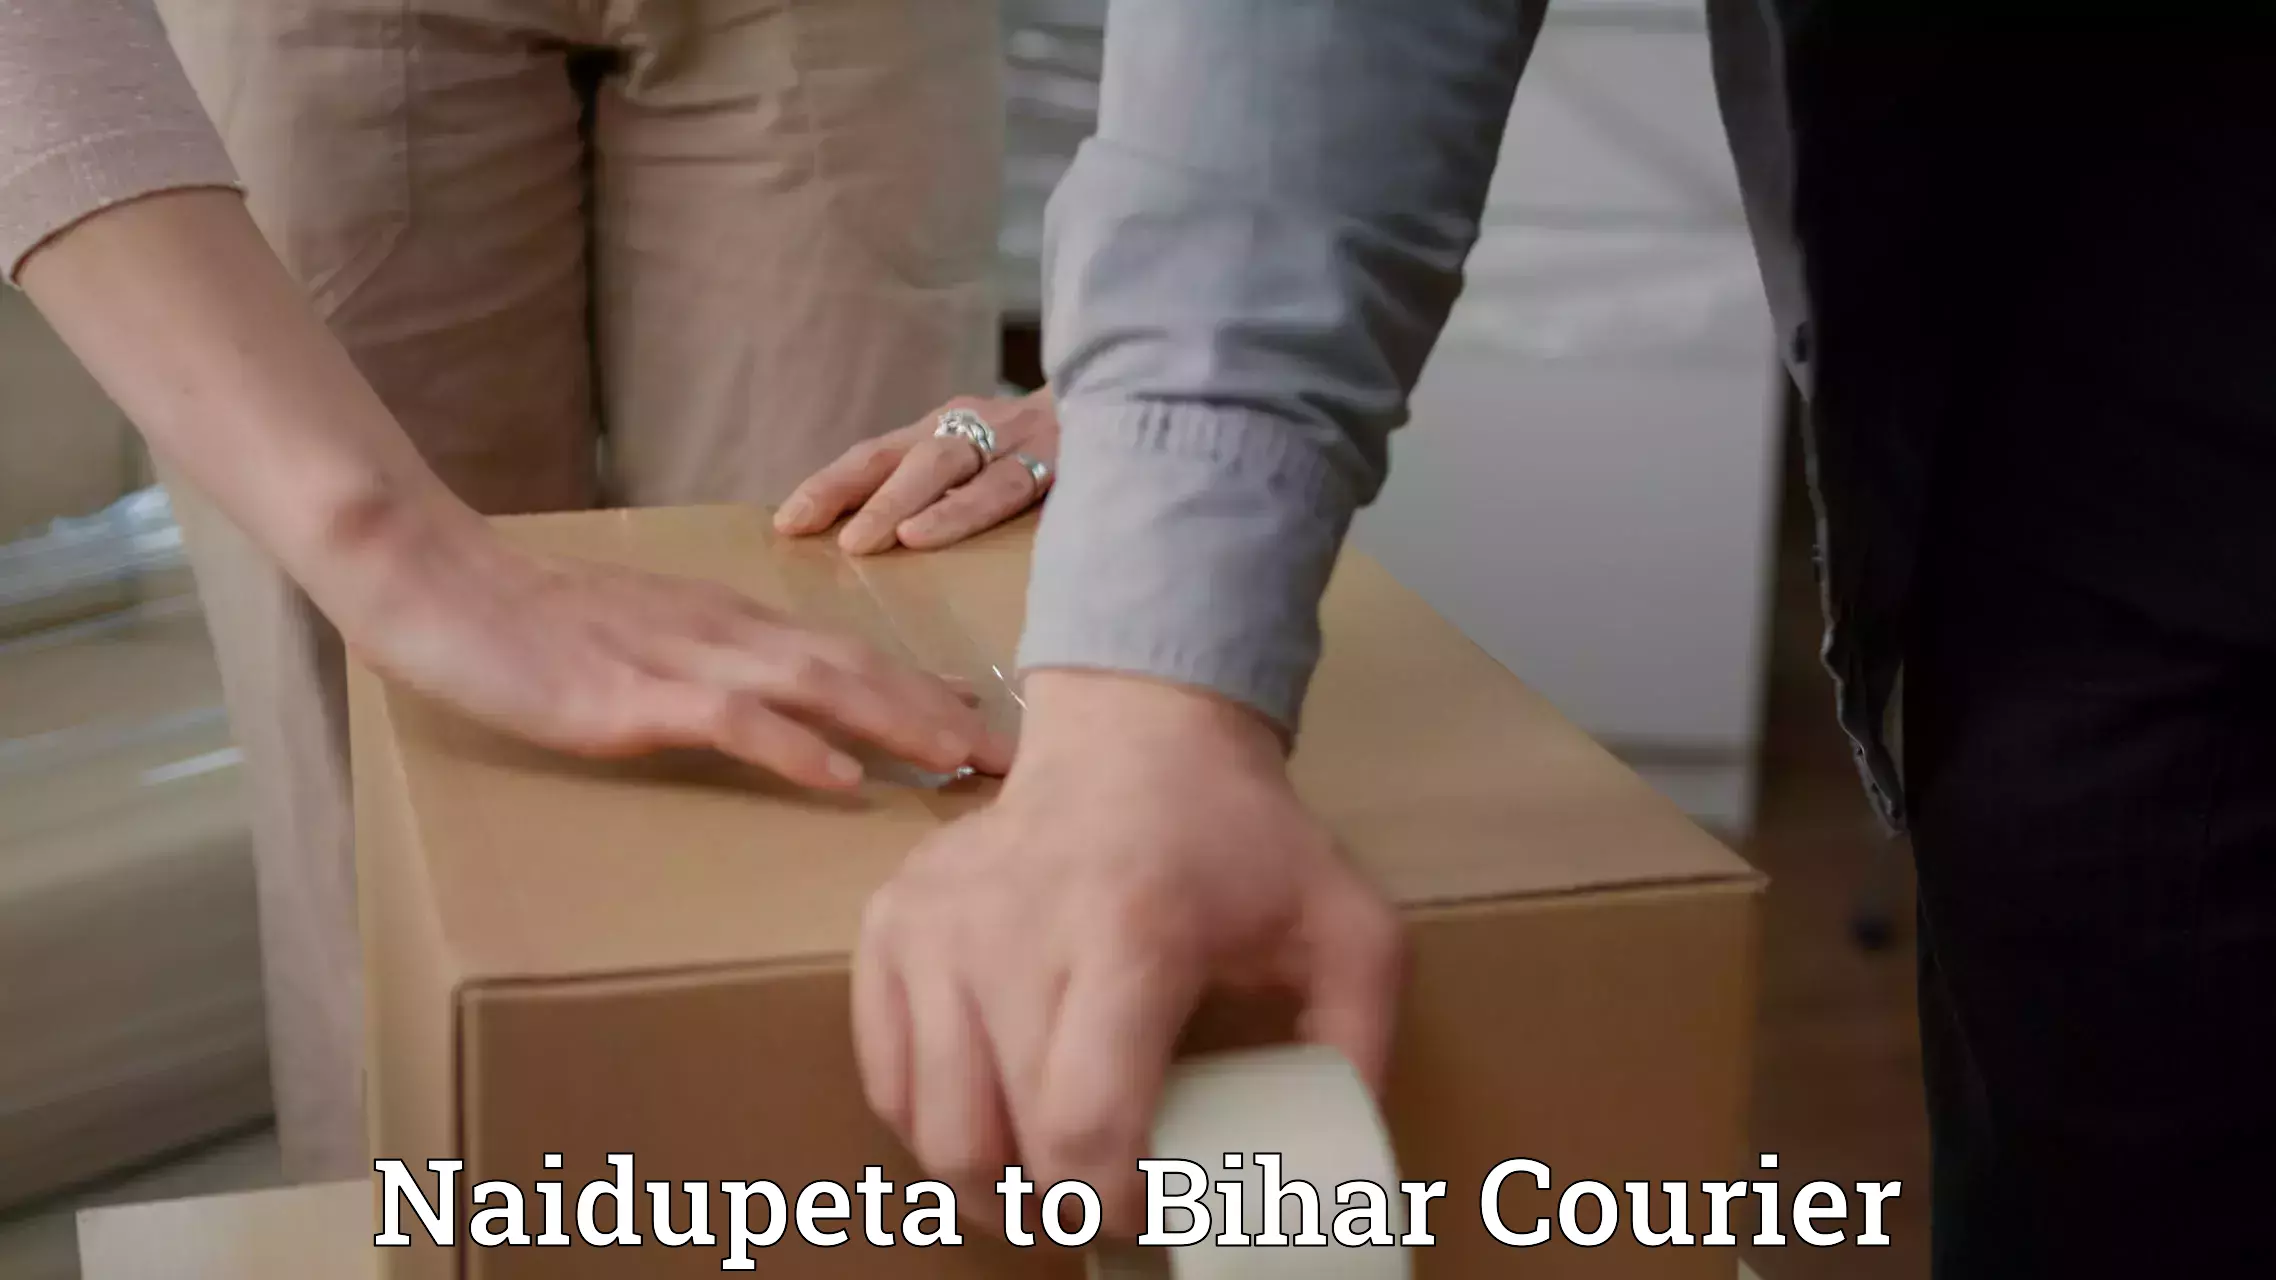 Courier service partnerships Naidupeta to Aurangabad Bihar